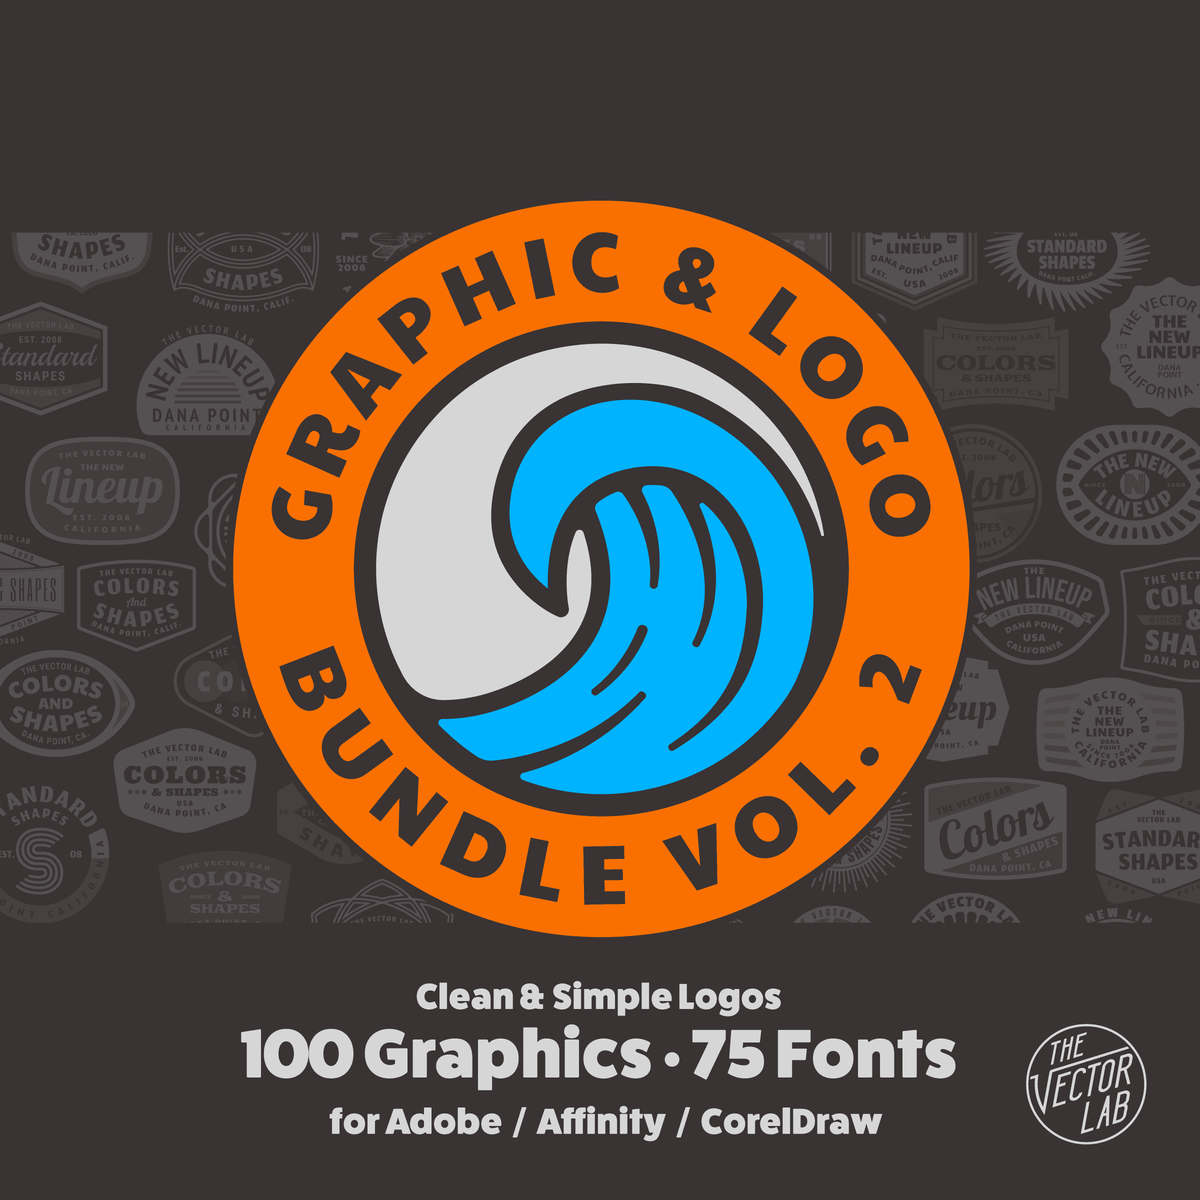 Graphic &amp; Logo Bundle Vol 2 - For Adobe, Affinity, CorelDraw